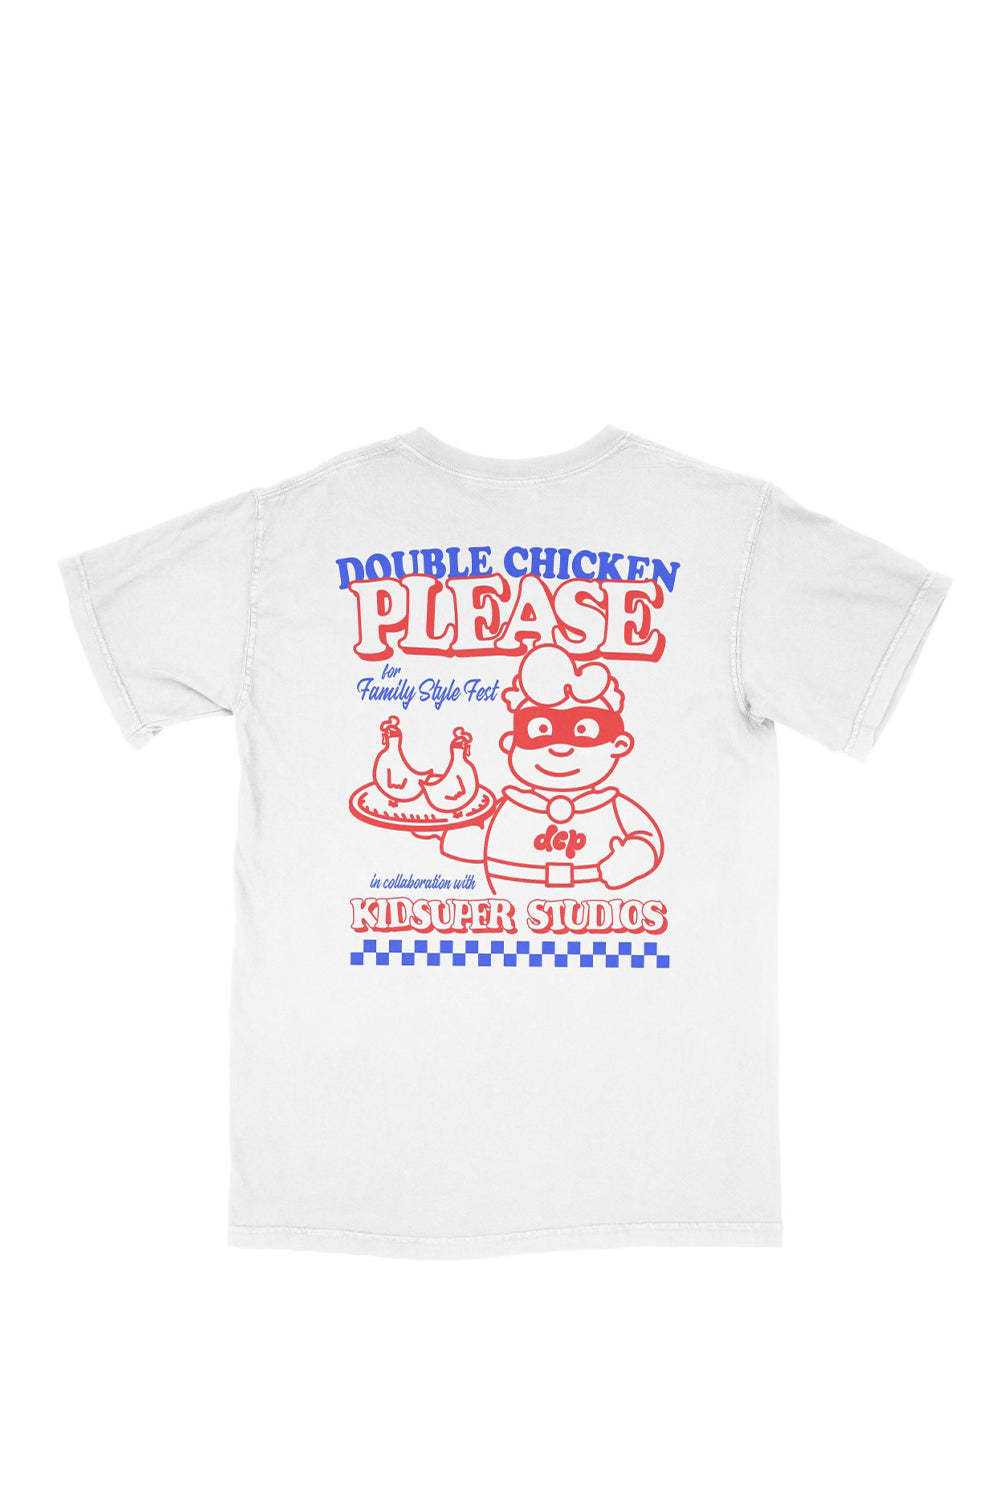 Kidsuper X Double Chicken Please T-Shirt